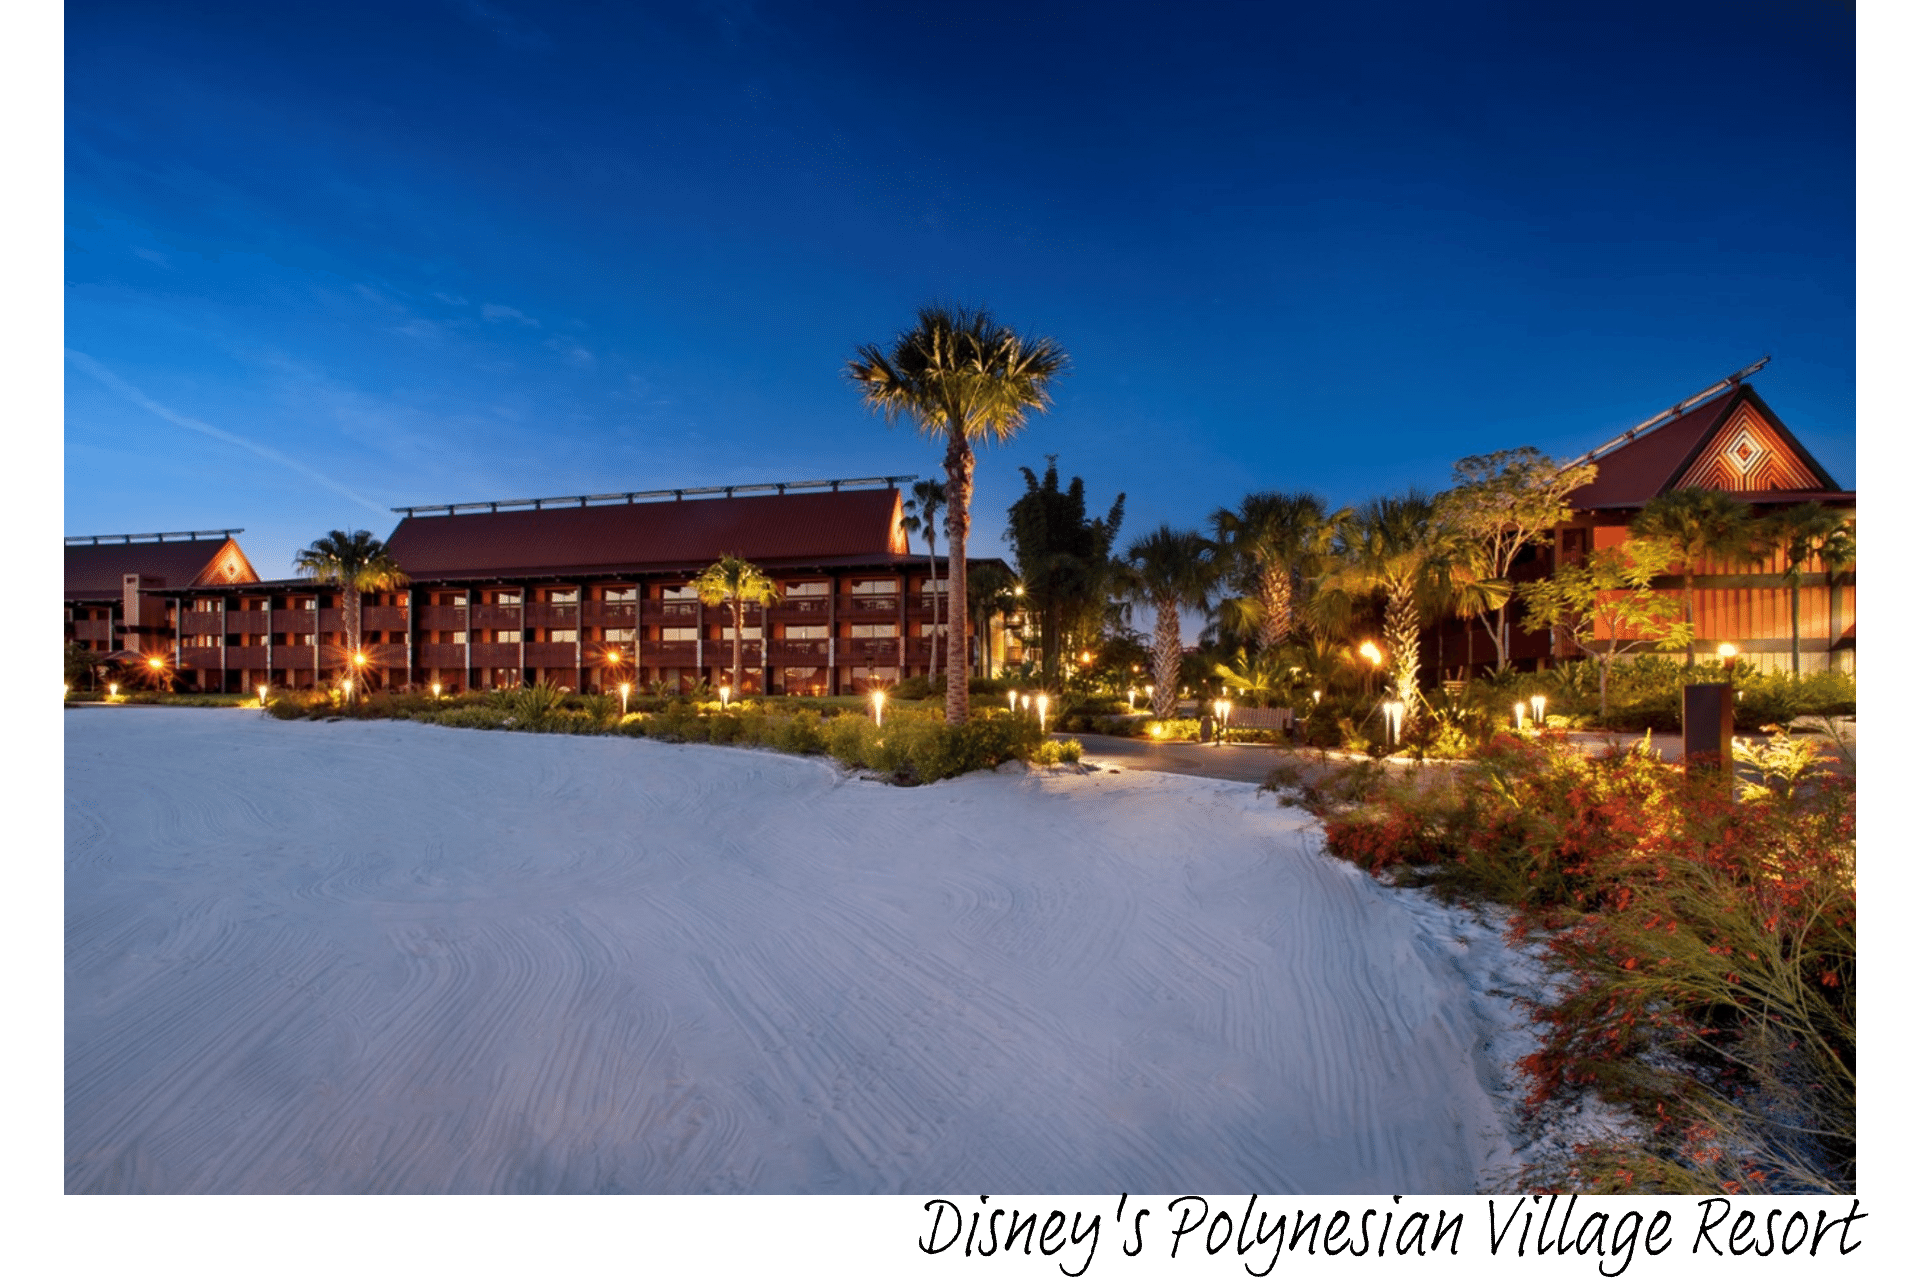 Disney's Polynesian Village Resort at night.